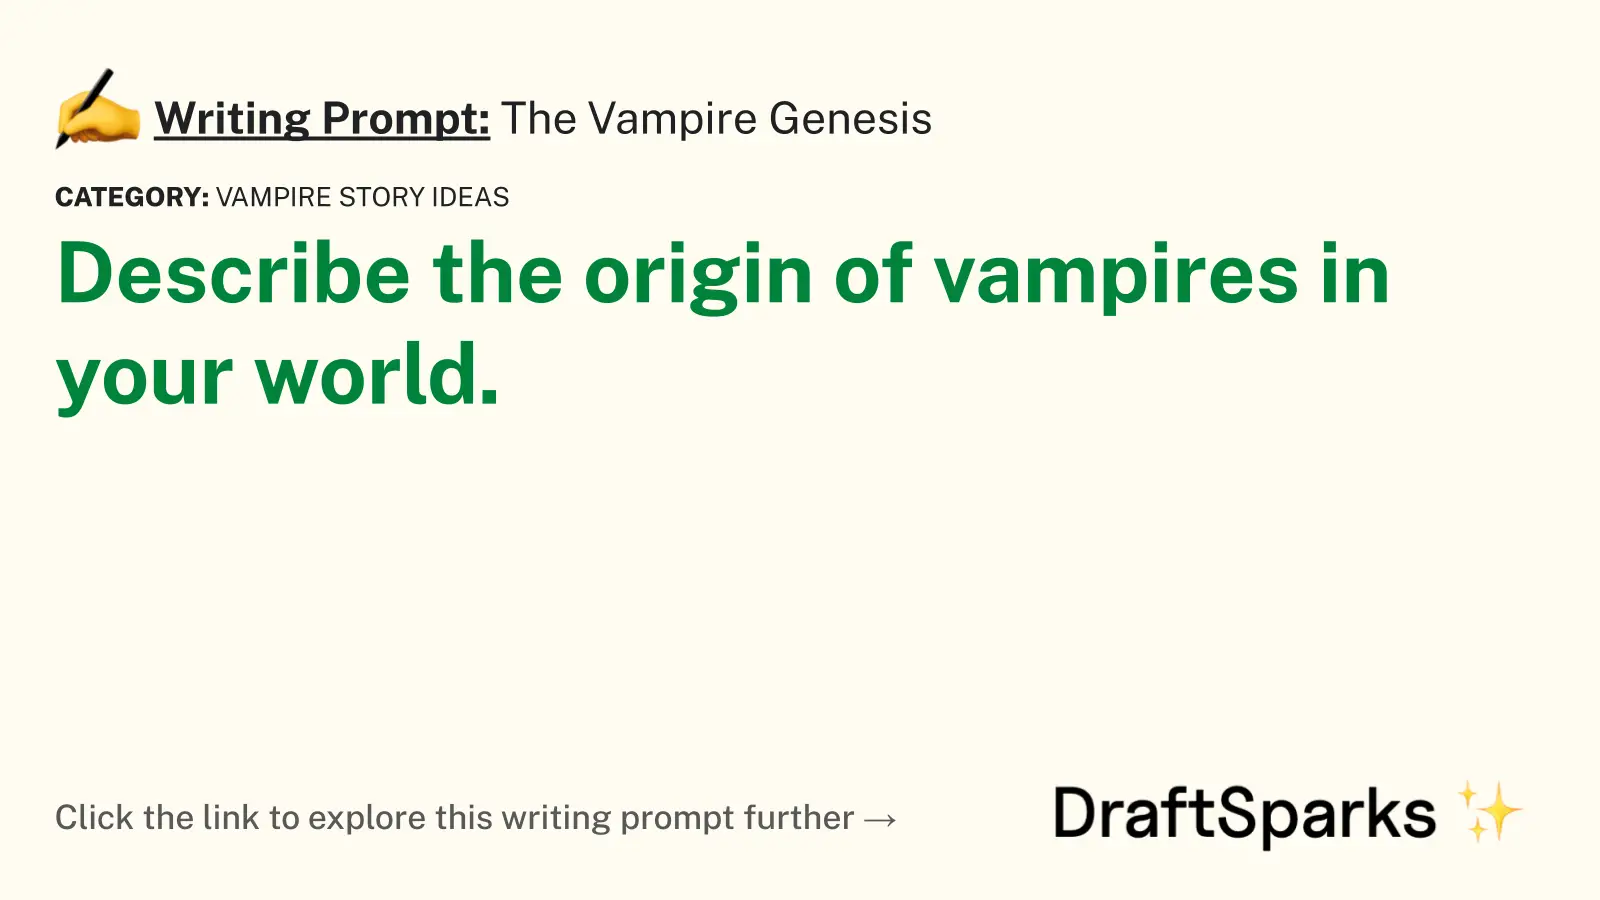 The Vampire Genesis